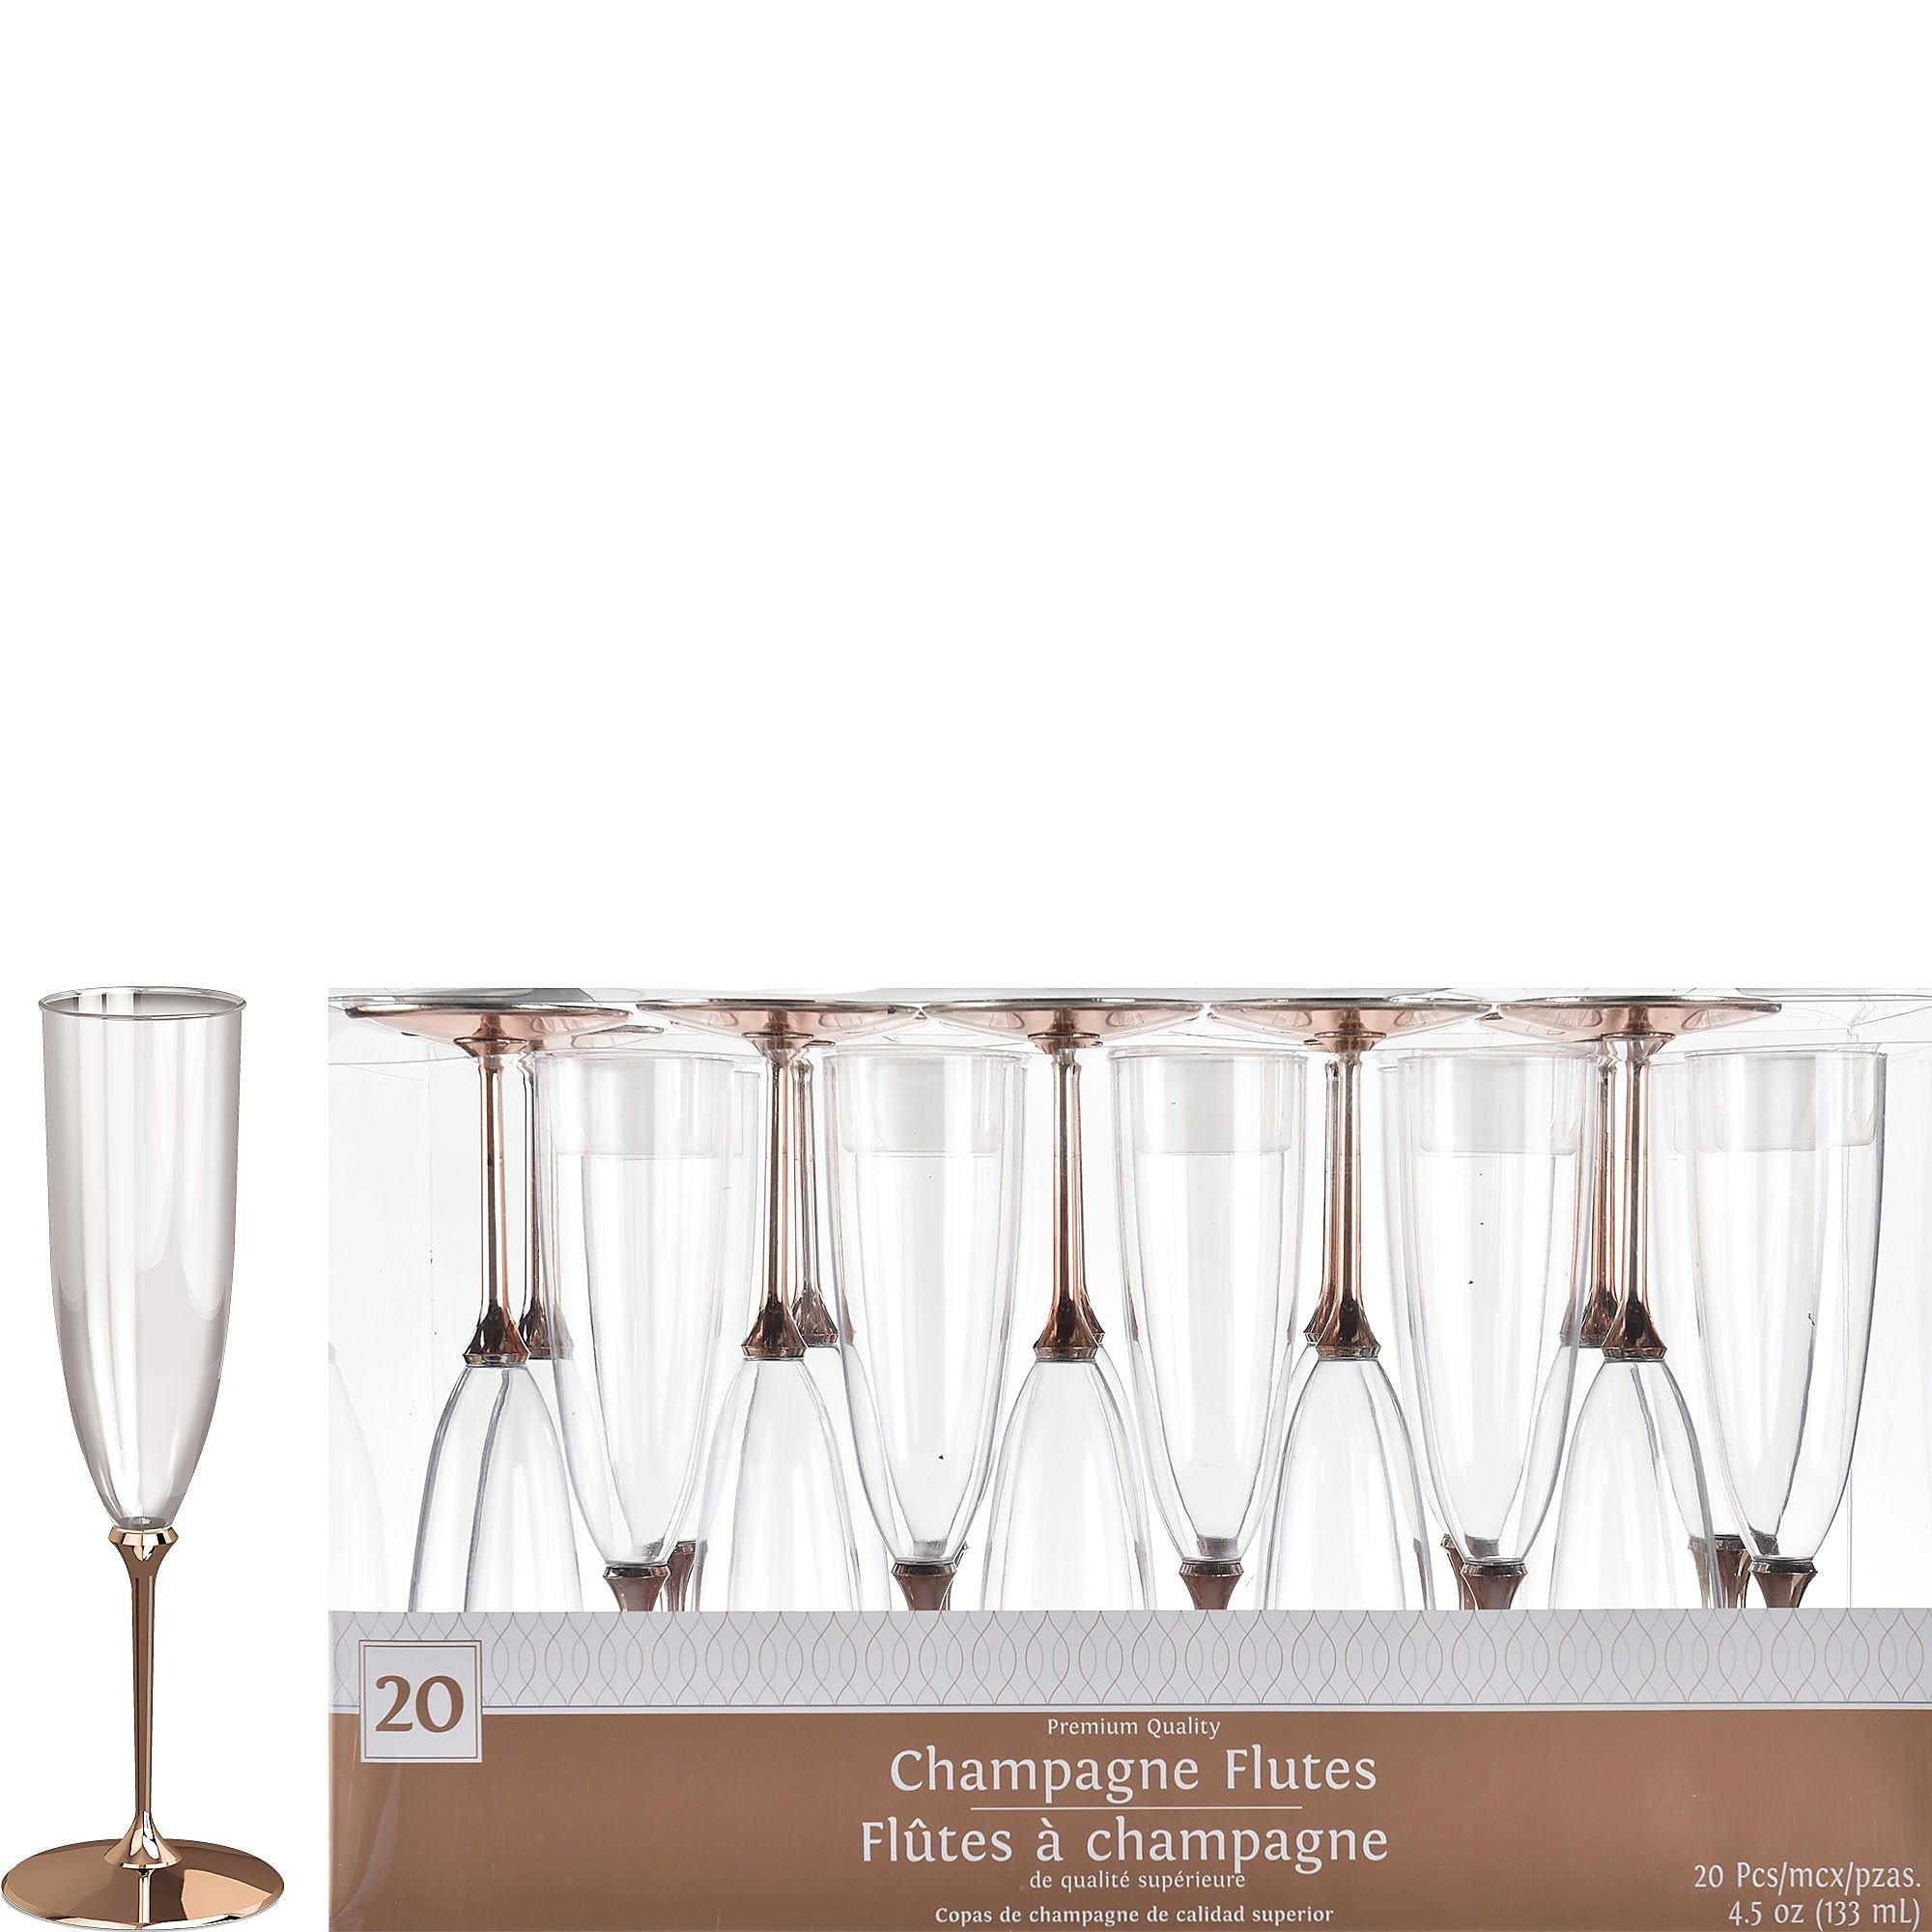 Clear Premium Plastic Wine Glasses with Gold Stems, 7oz, 20ct